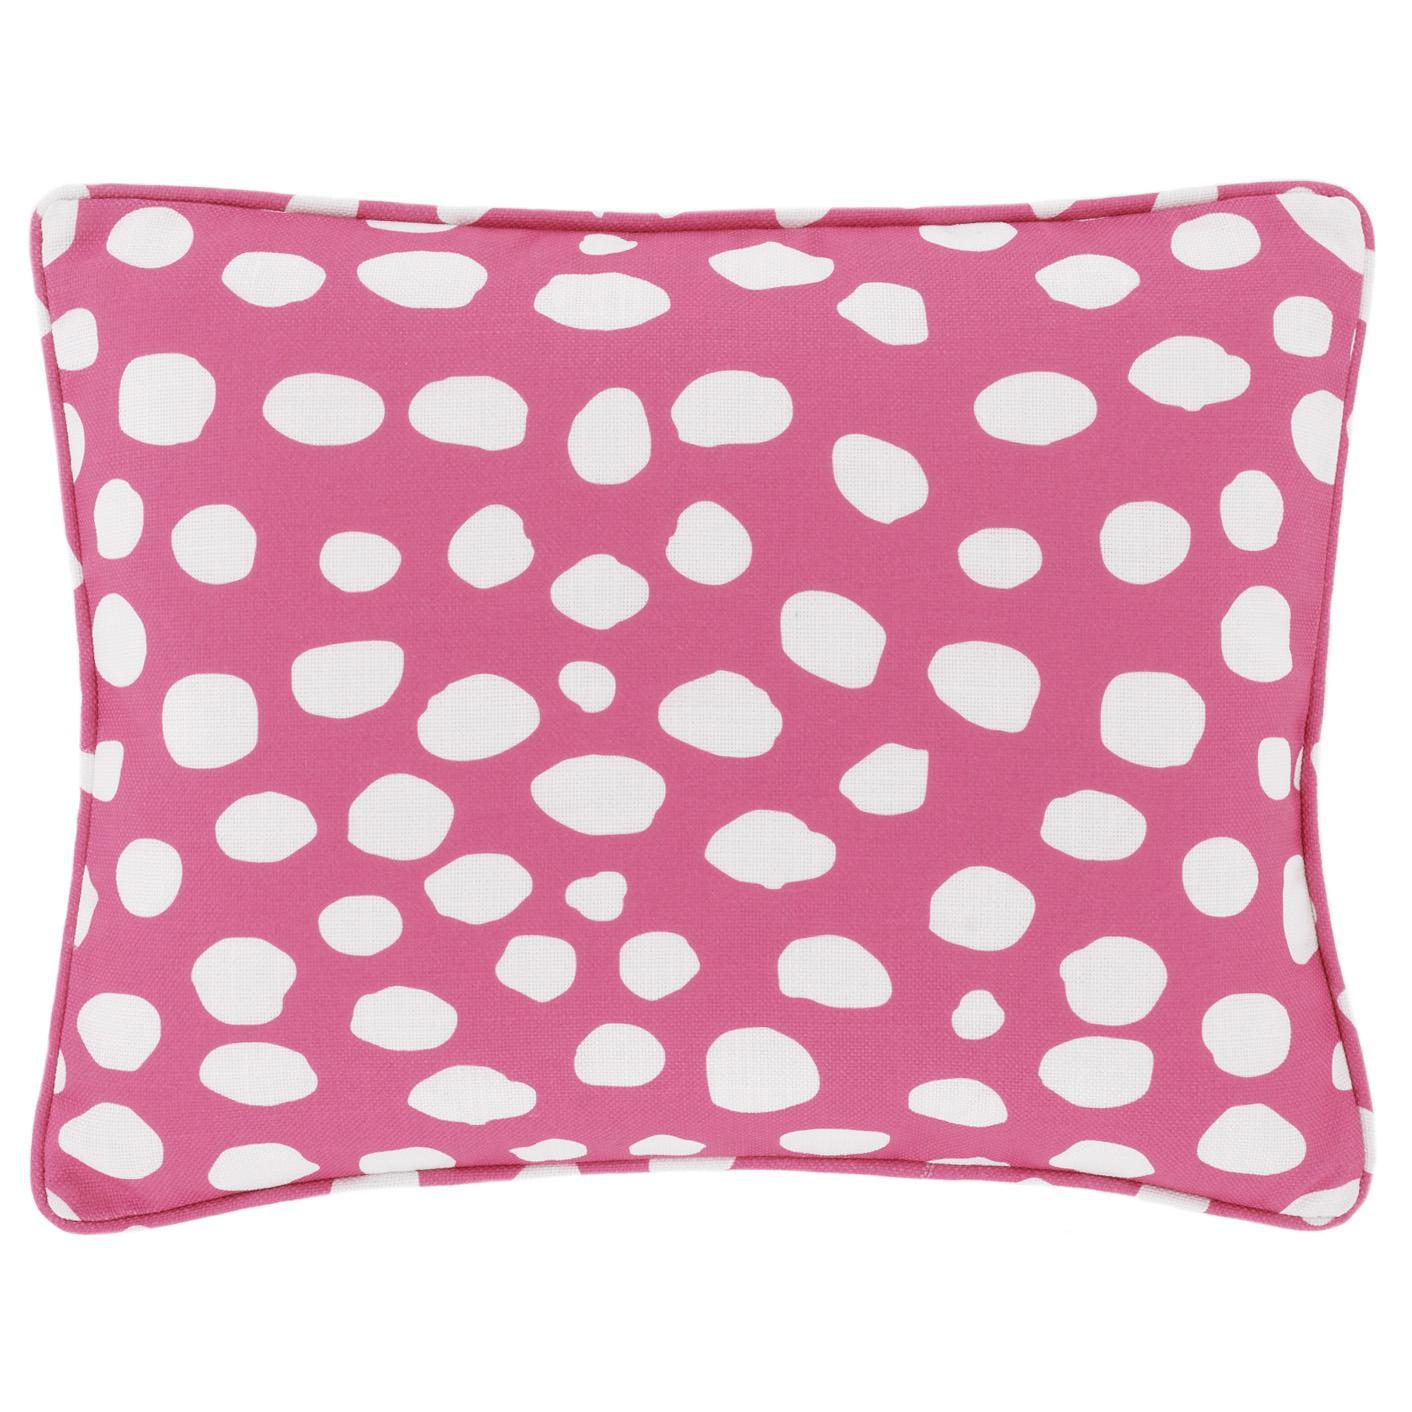 Pillow - "Spot On" Fuschia - Indoor/Outdoor - 16" Lumbar